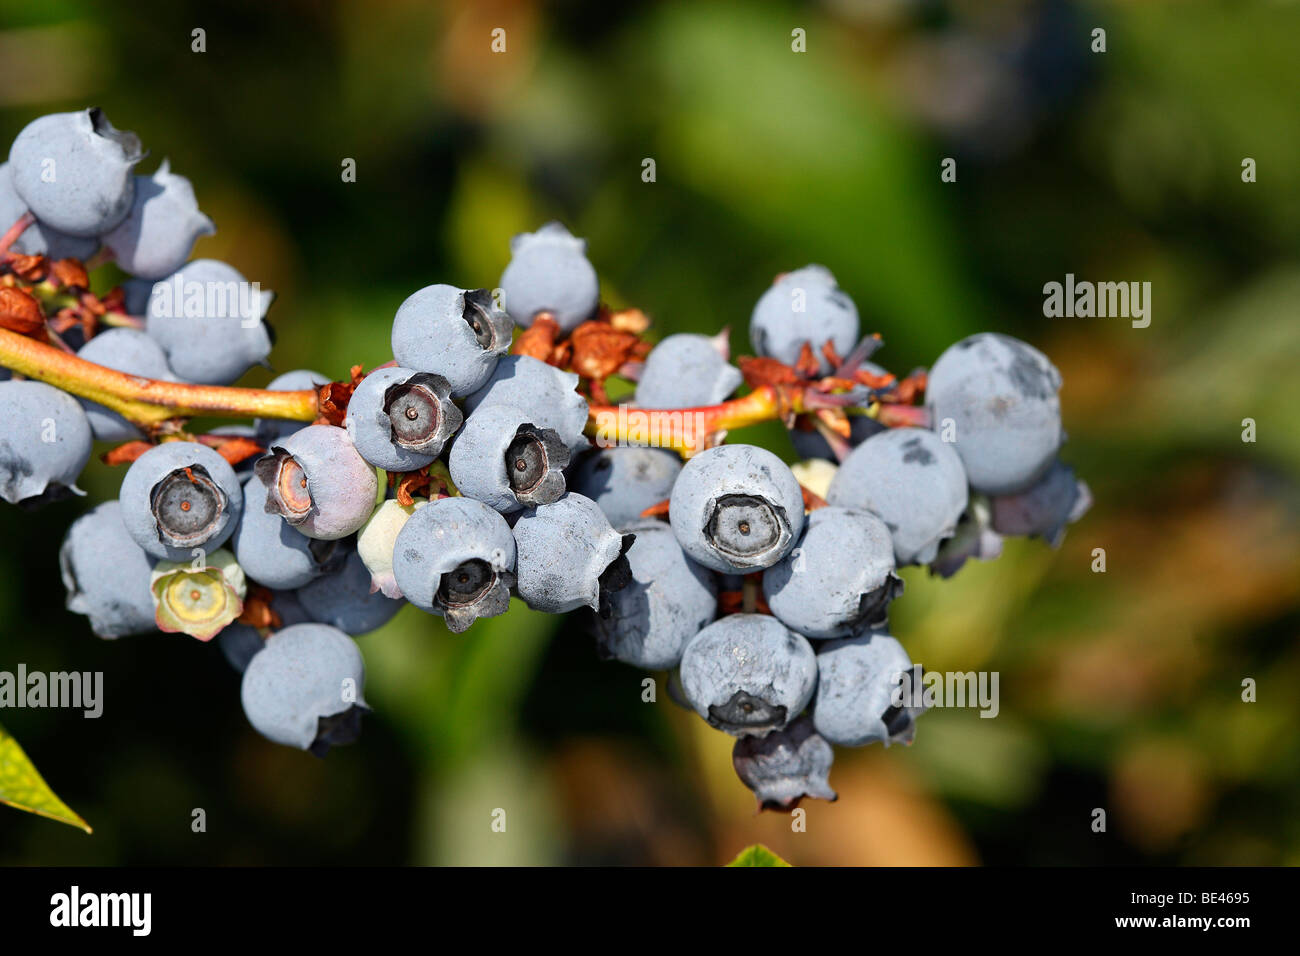 Nördlichen Schneeball Heidelbeere (Vaccinium Corymbosum, Vaccinium Angustifolium), reifen Beeren auf Bush. Stockfoto